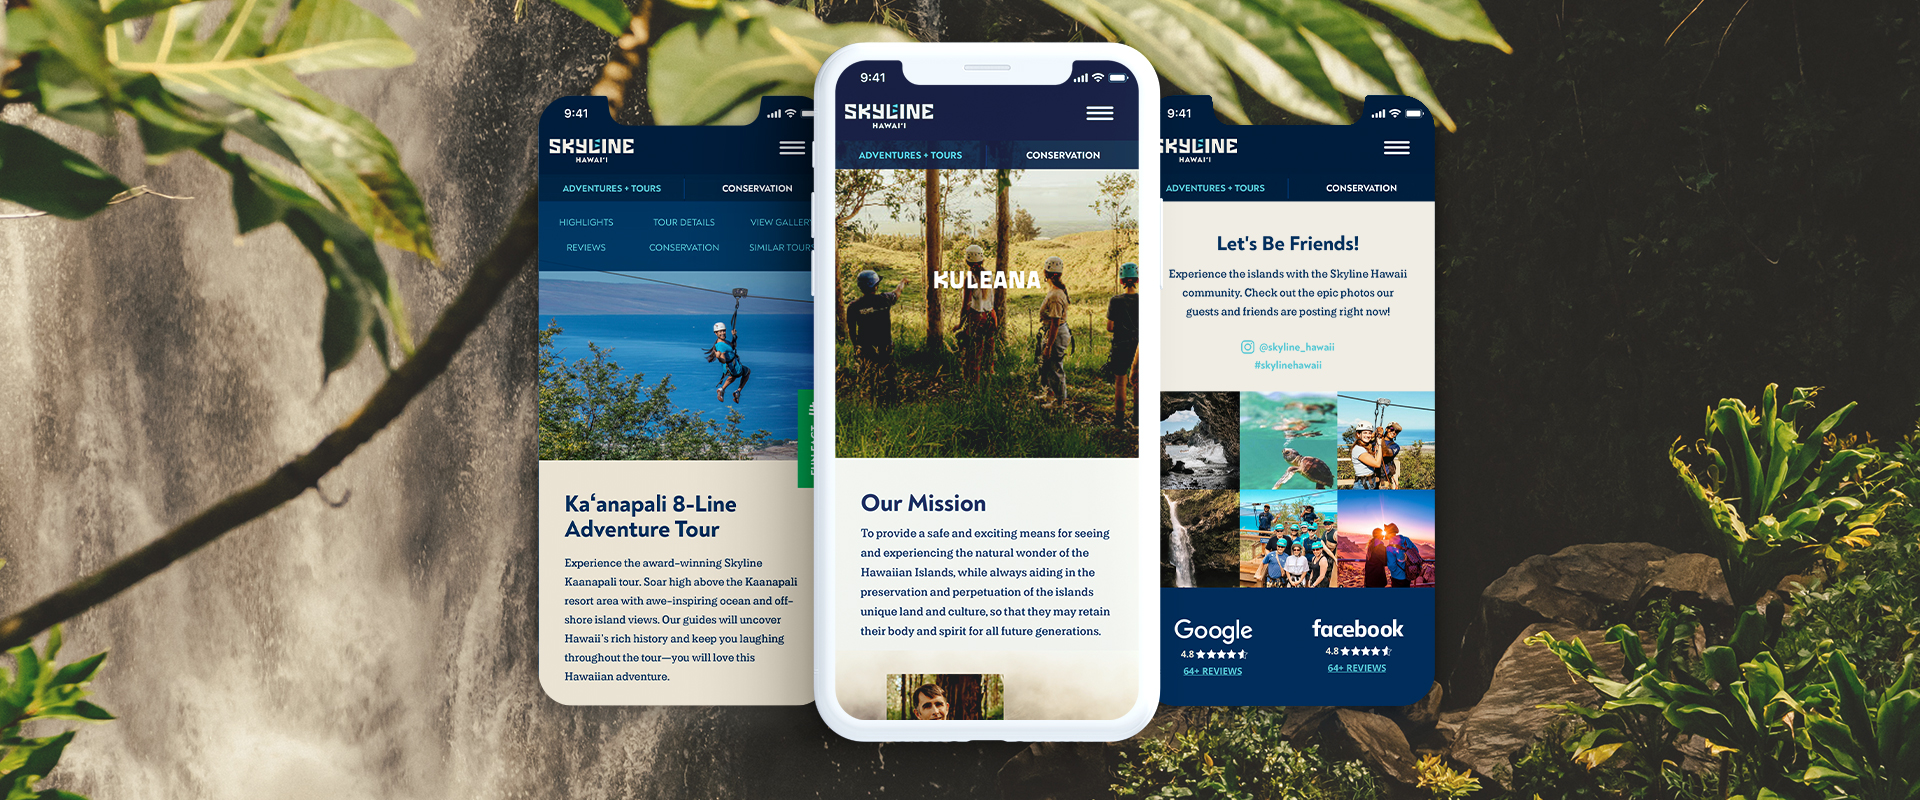 Skyline website made for mobile first